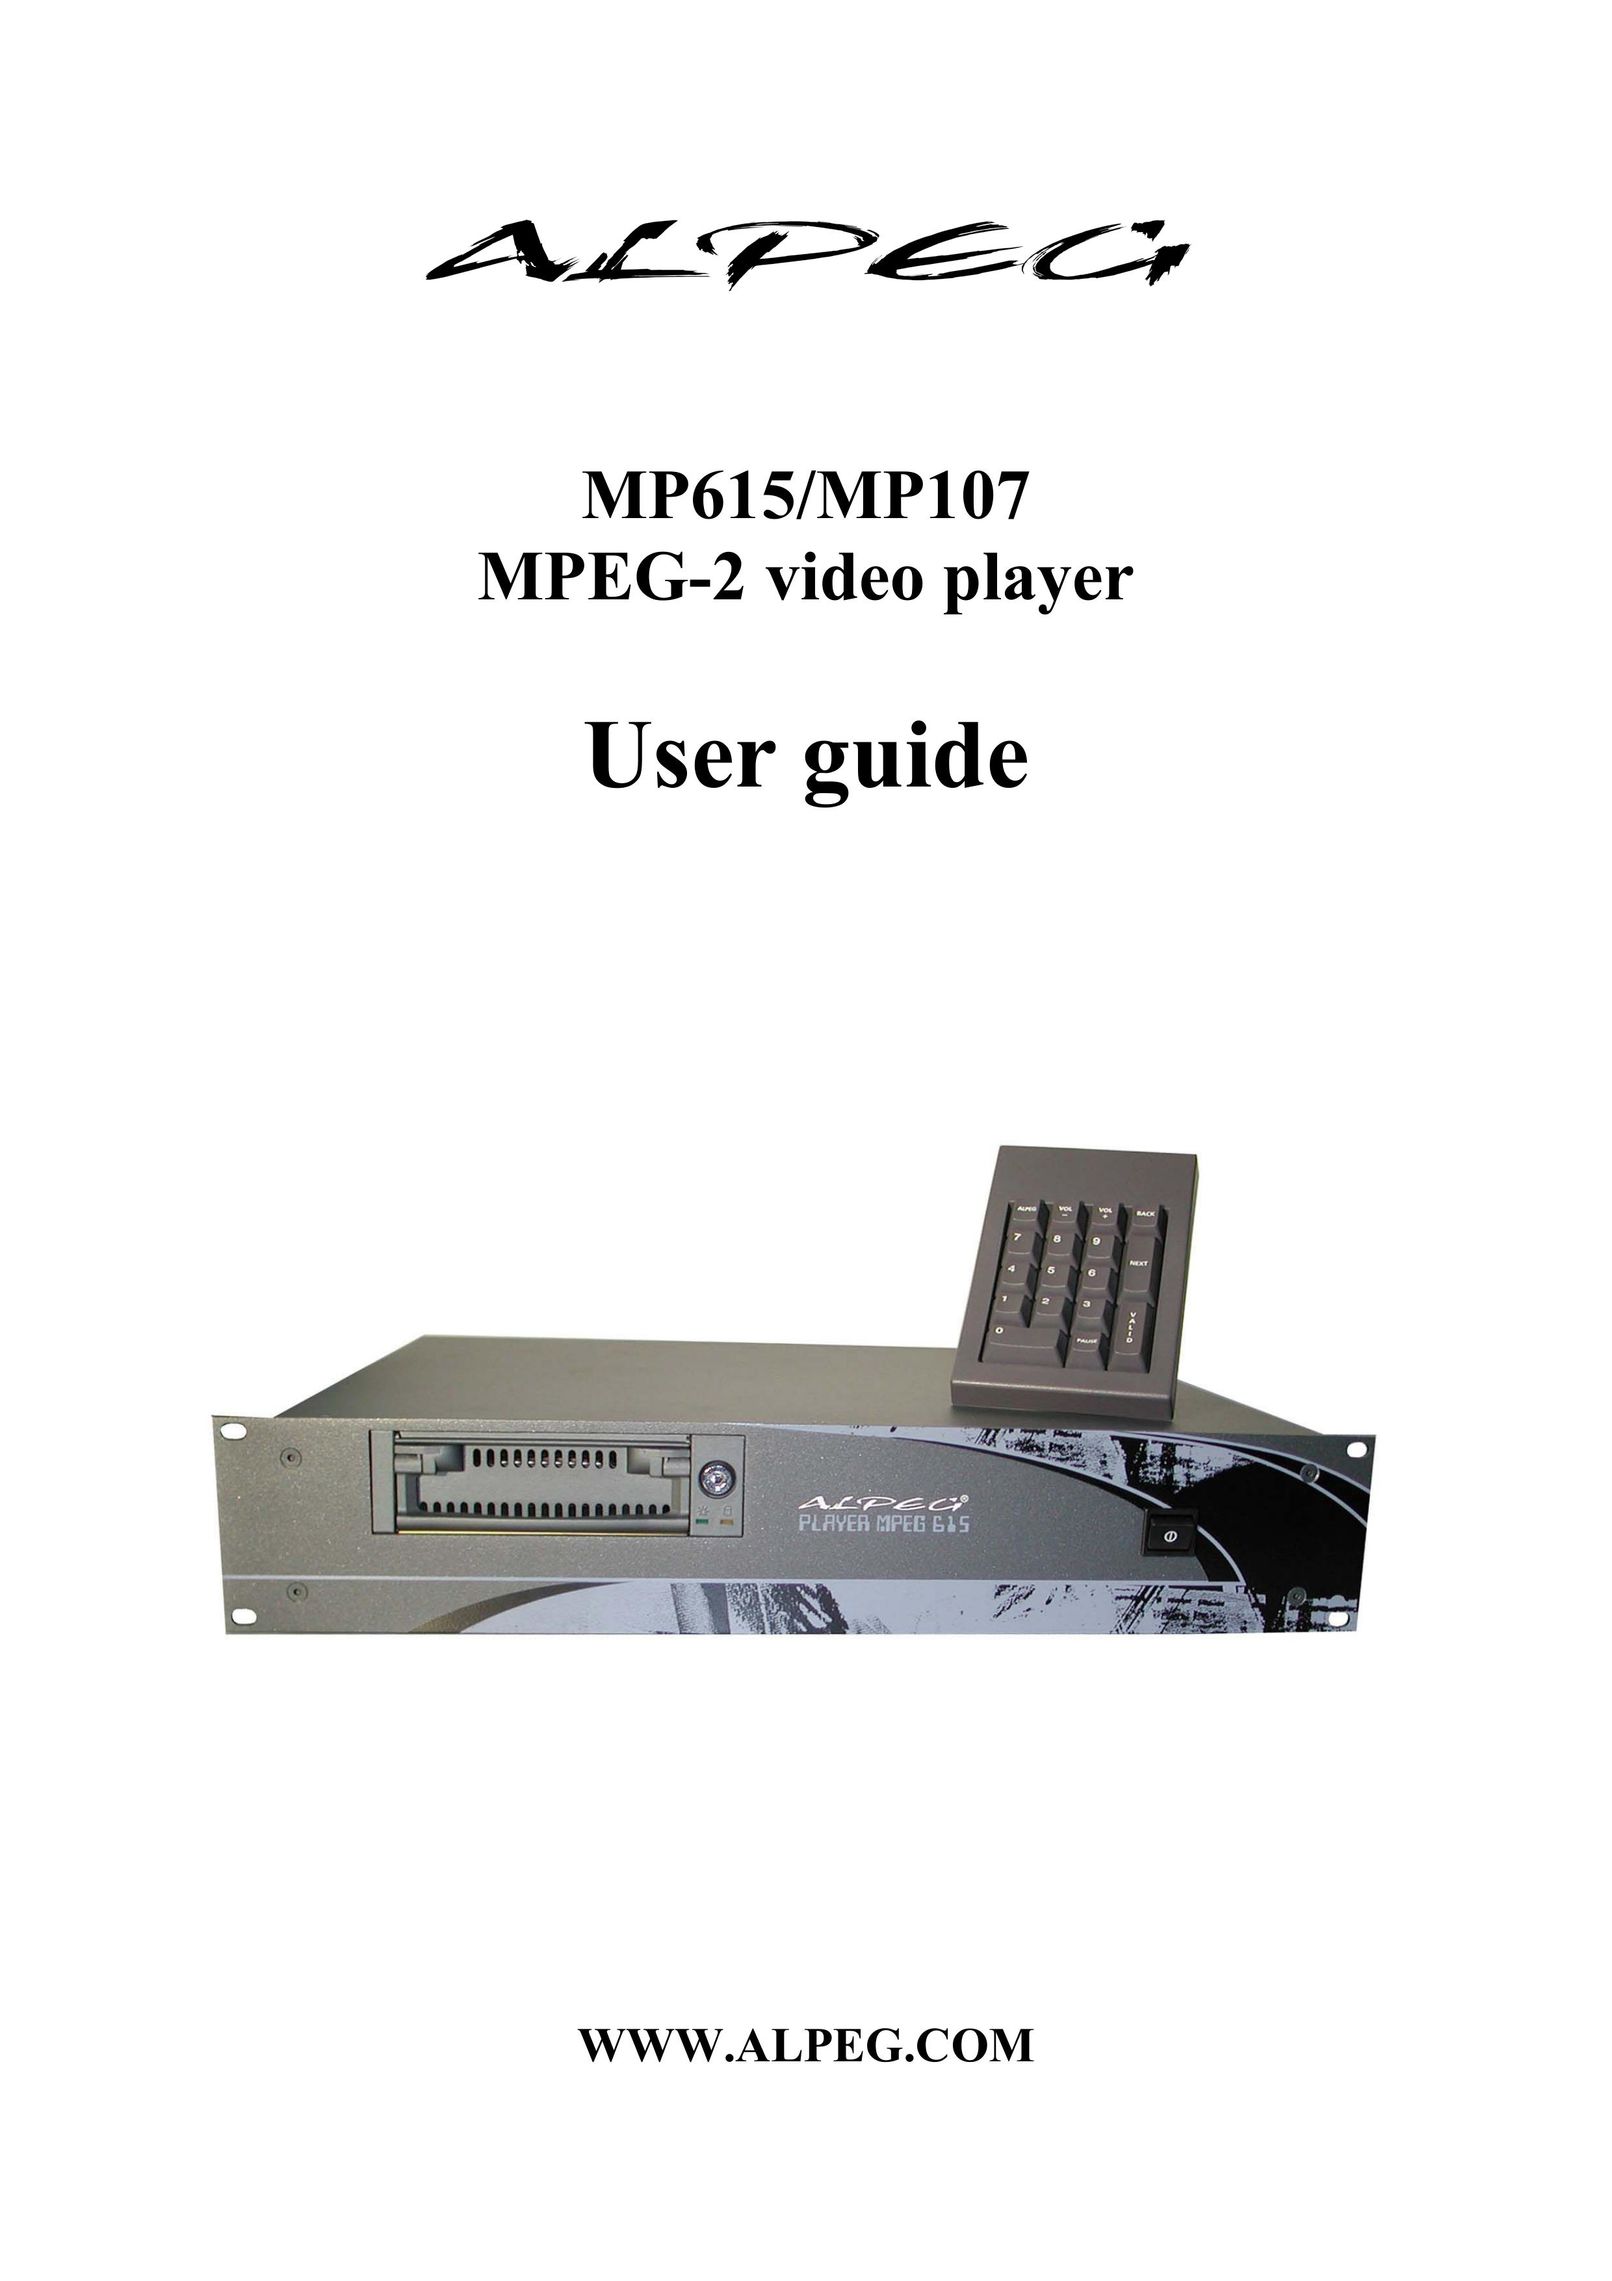 Alpes USA MP615/MP107 VCR User Manual